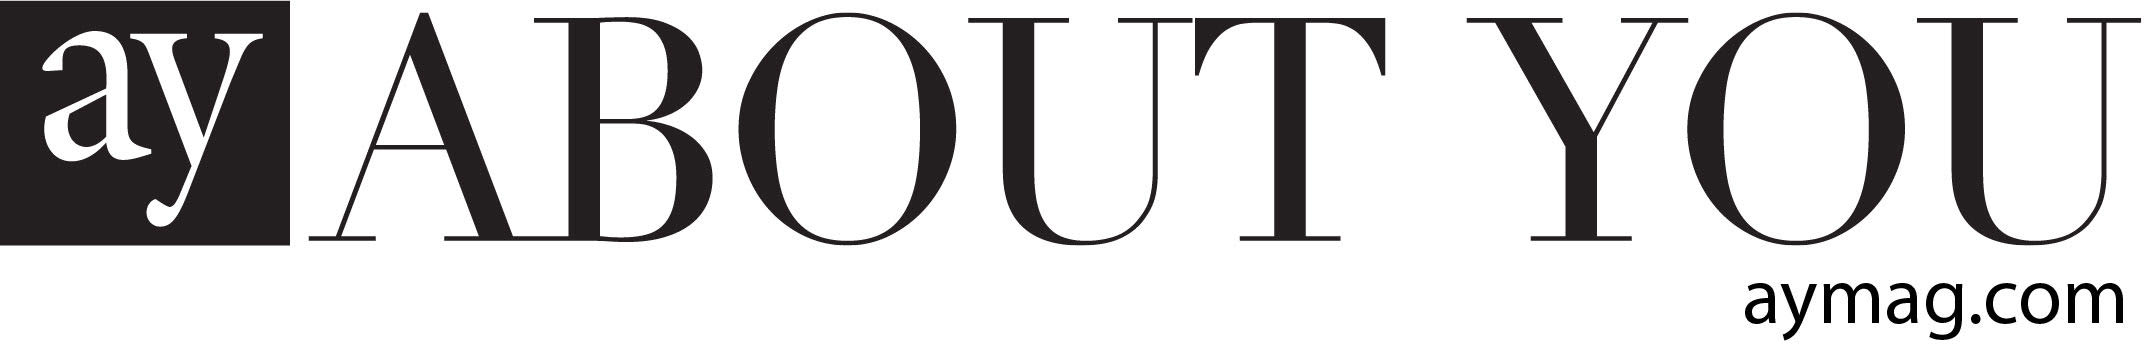 About You Magazine logo